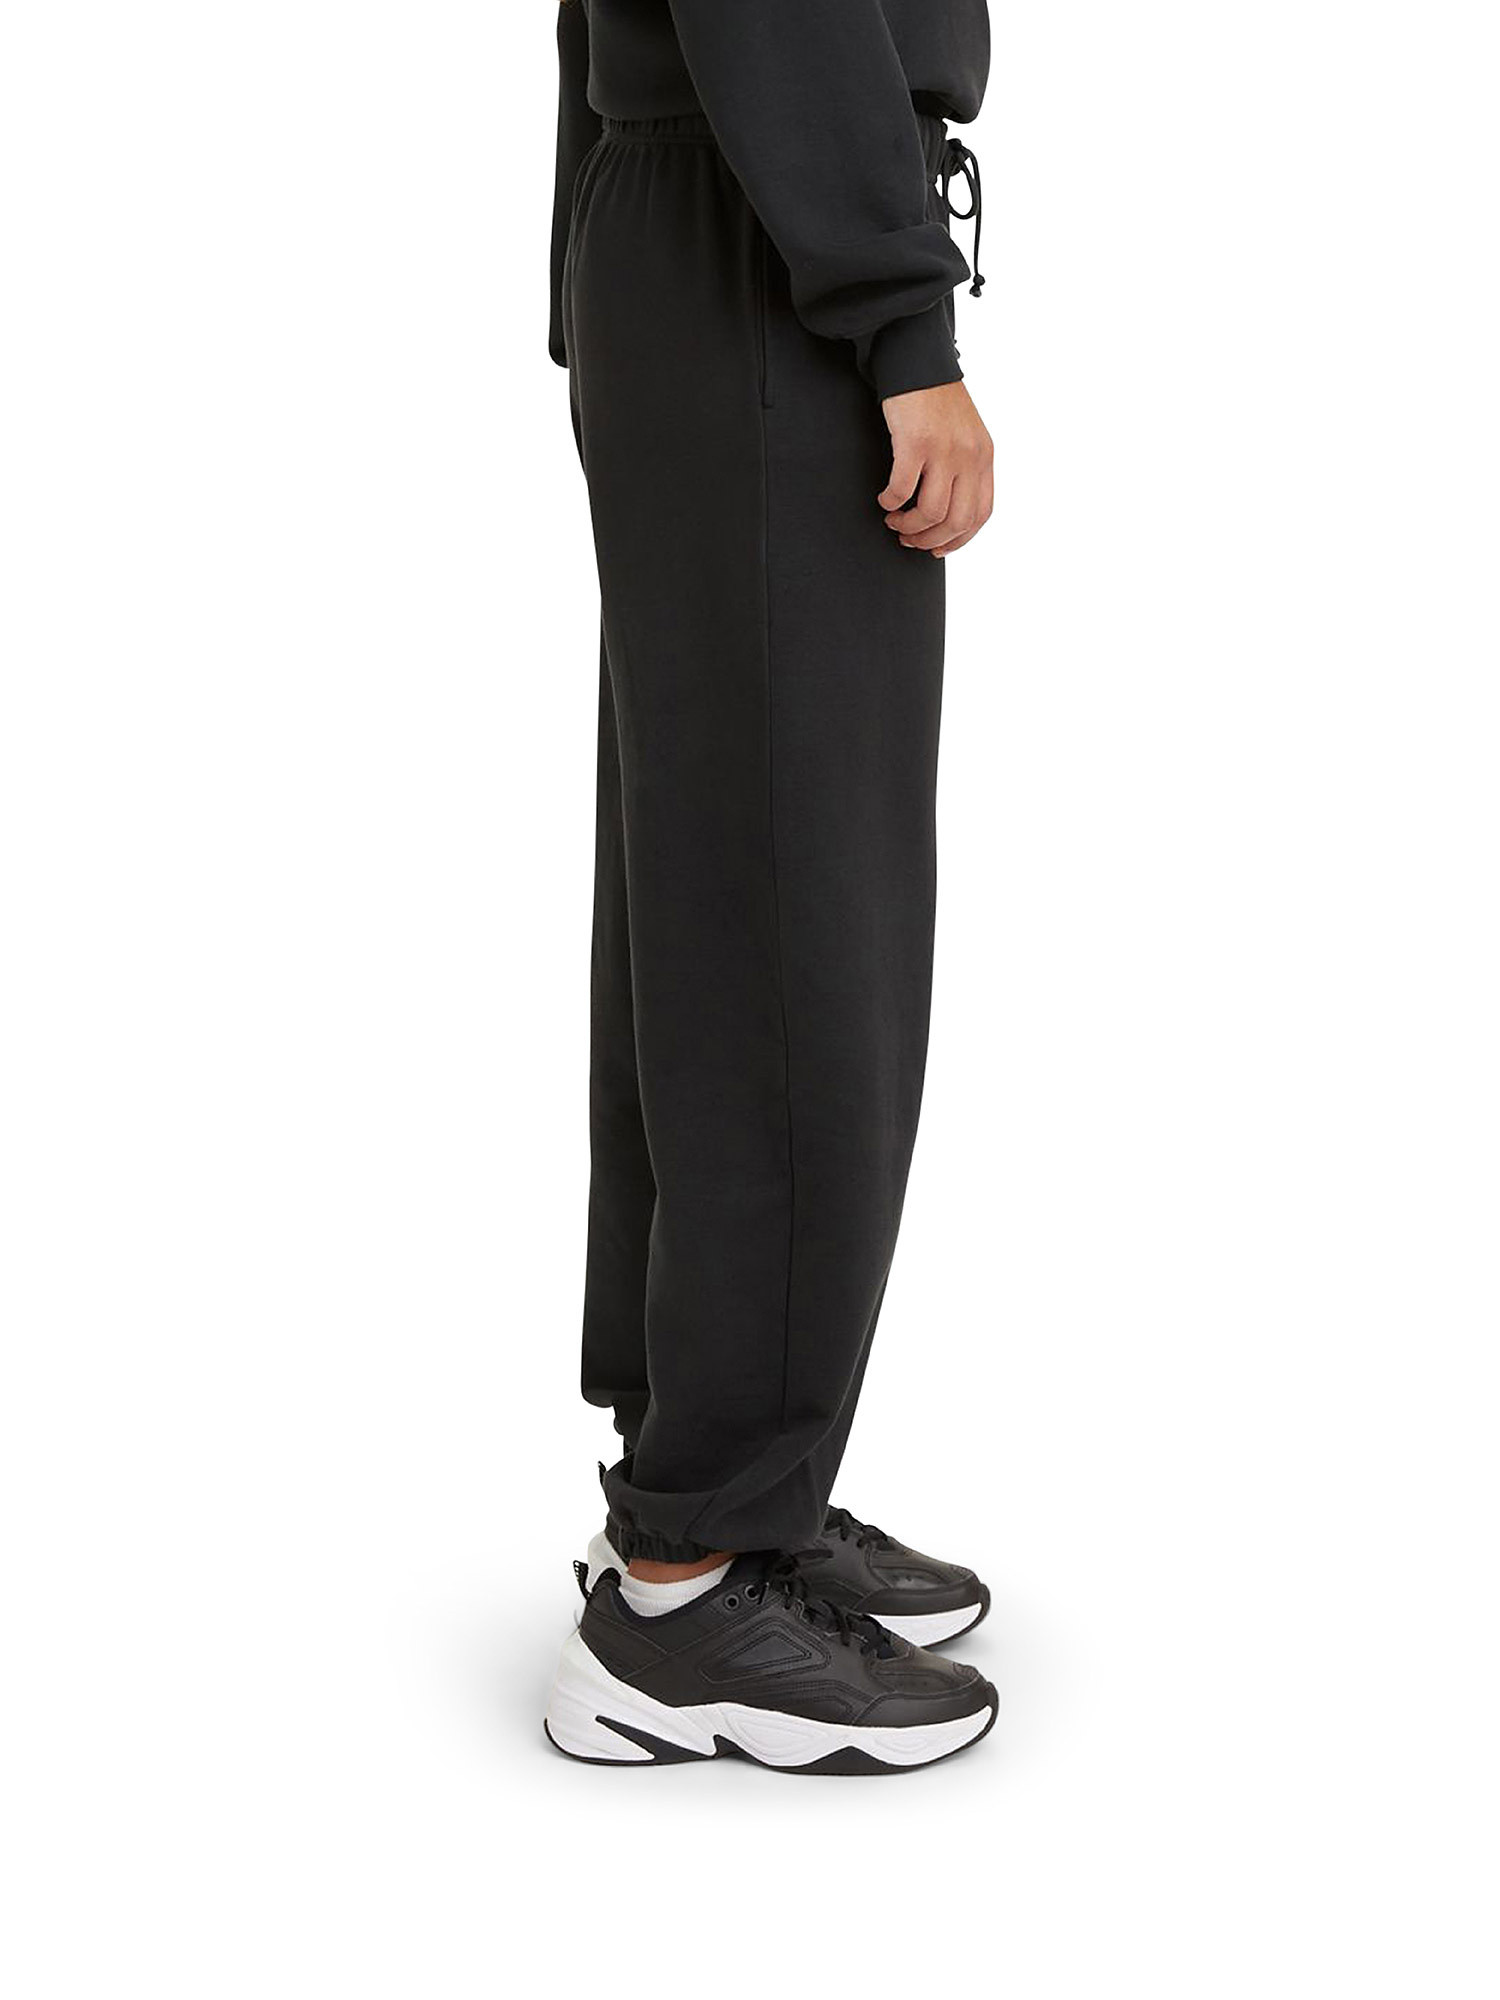 WFH Loungewear sweatpants, Black, large image number 2